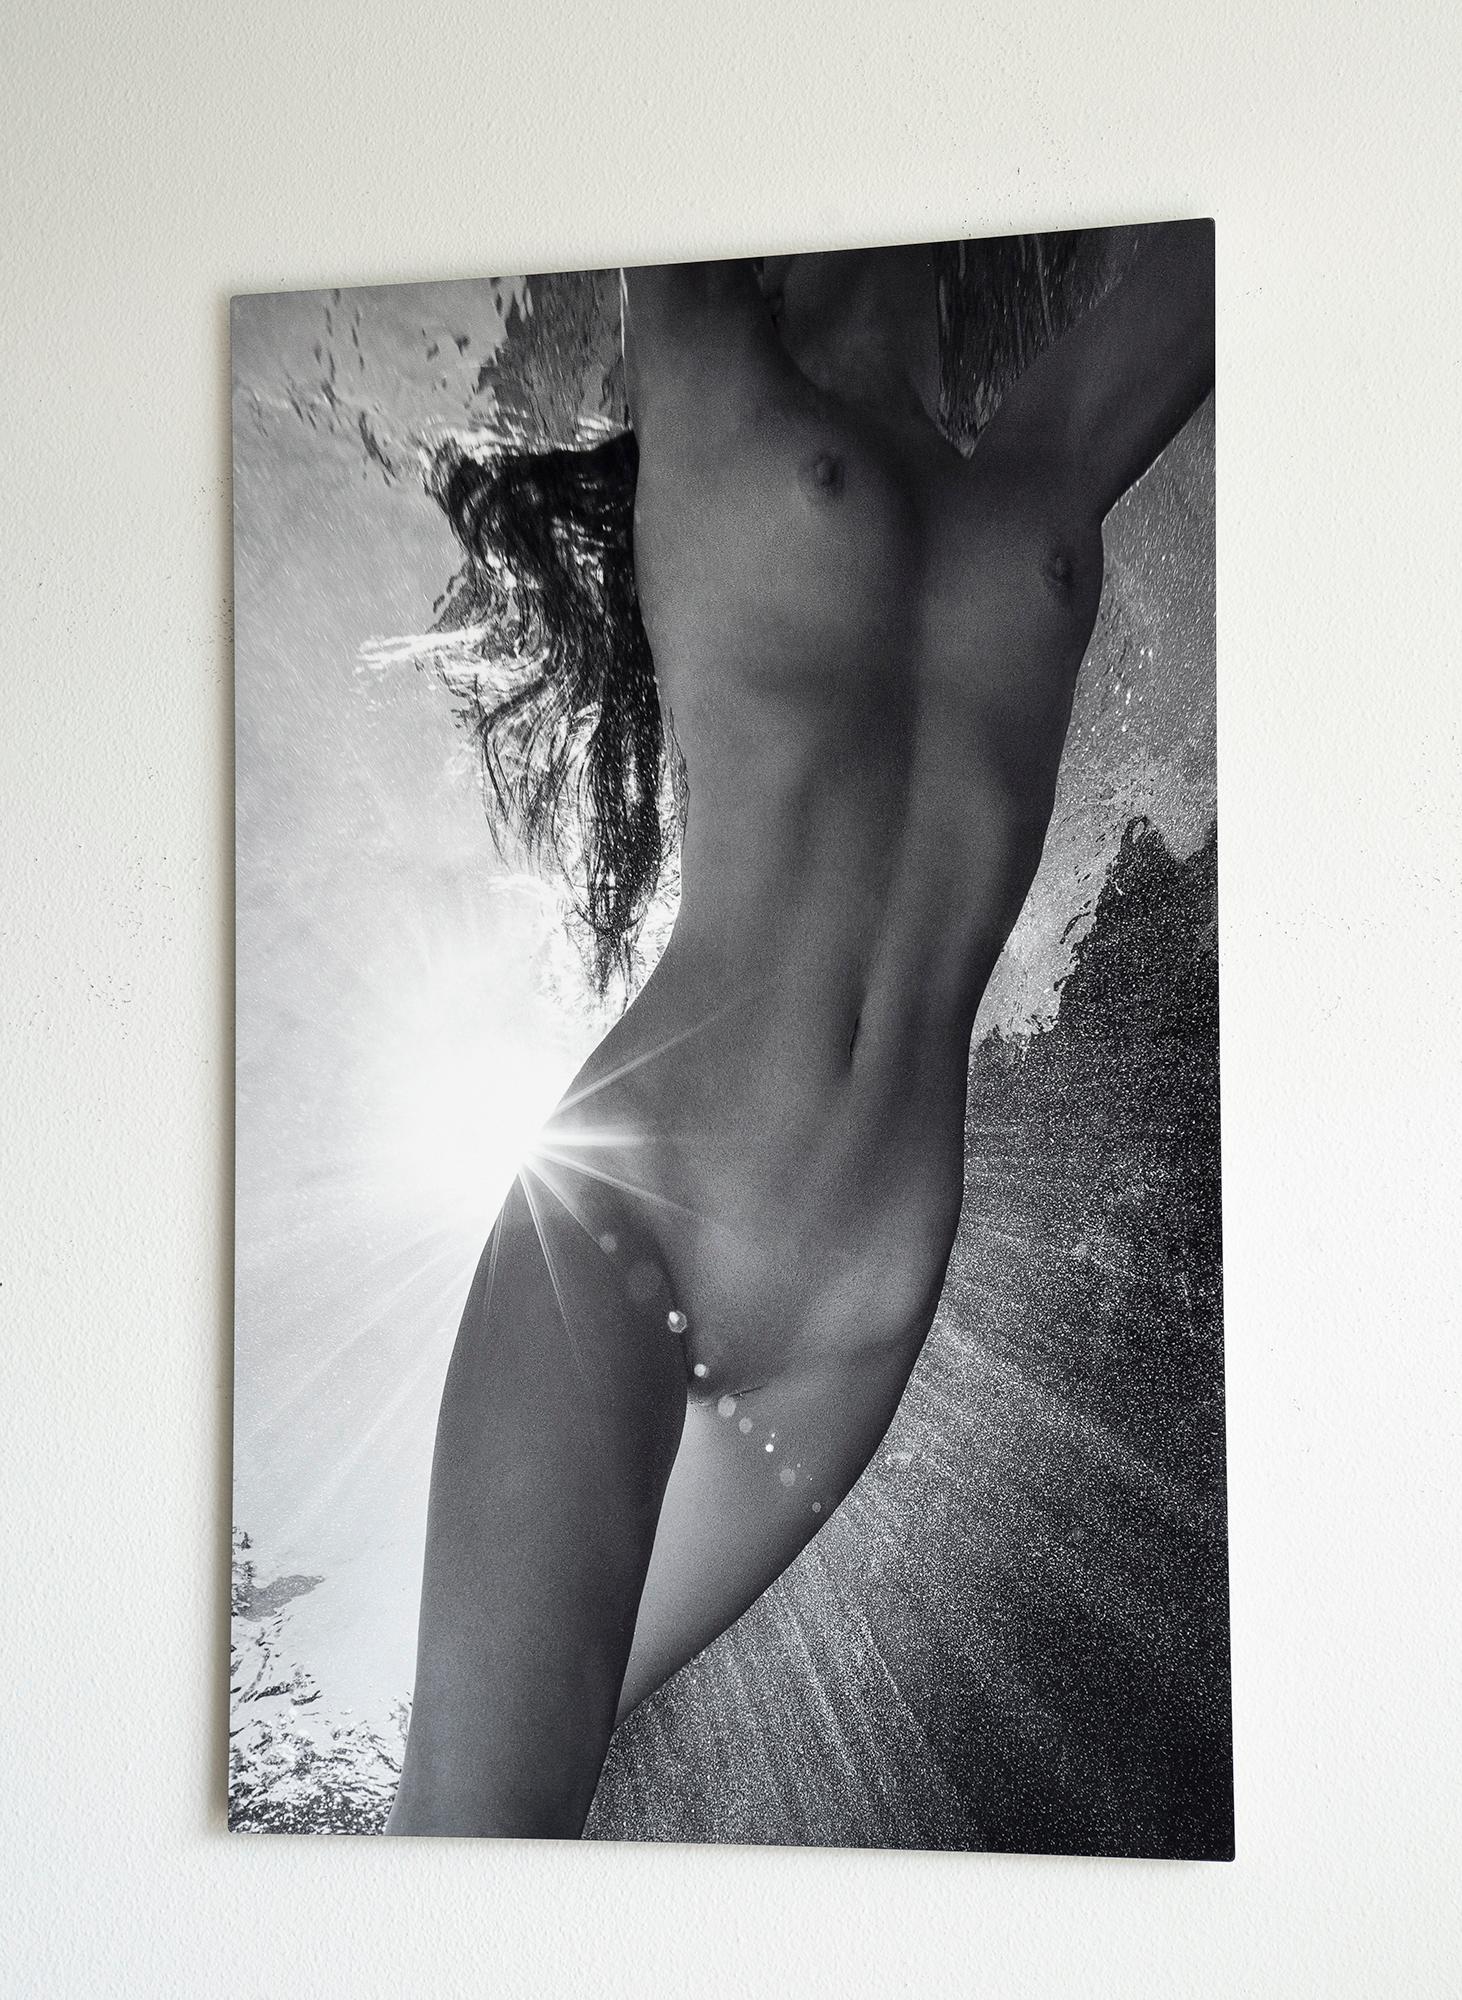 Sunbeams - underwater black & white nude photograph - print on aluminum 36x24